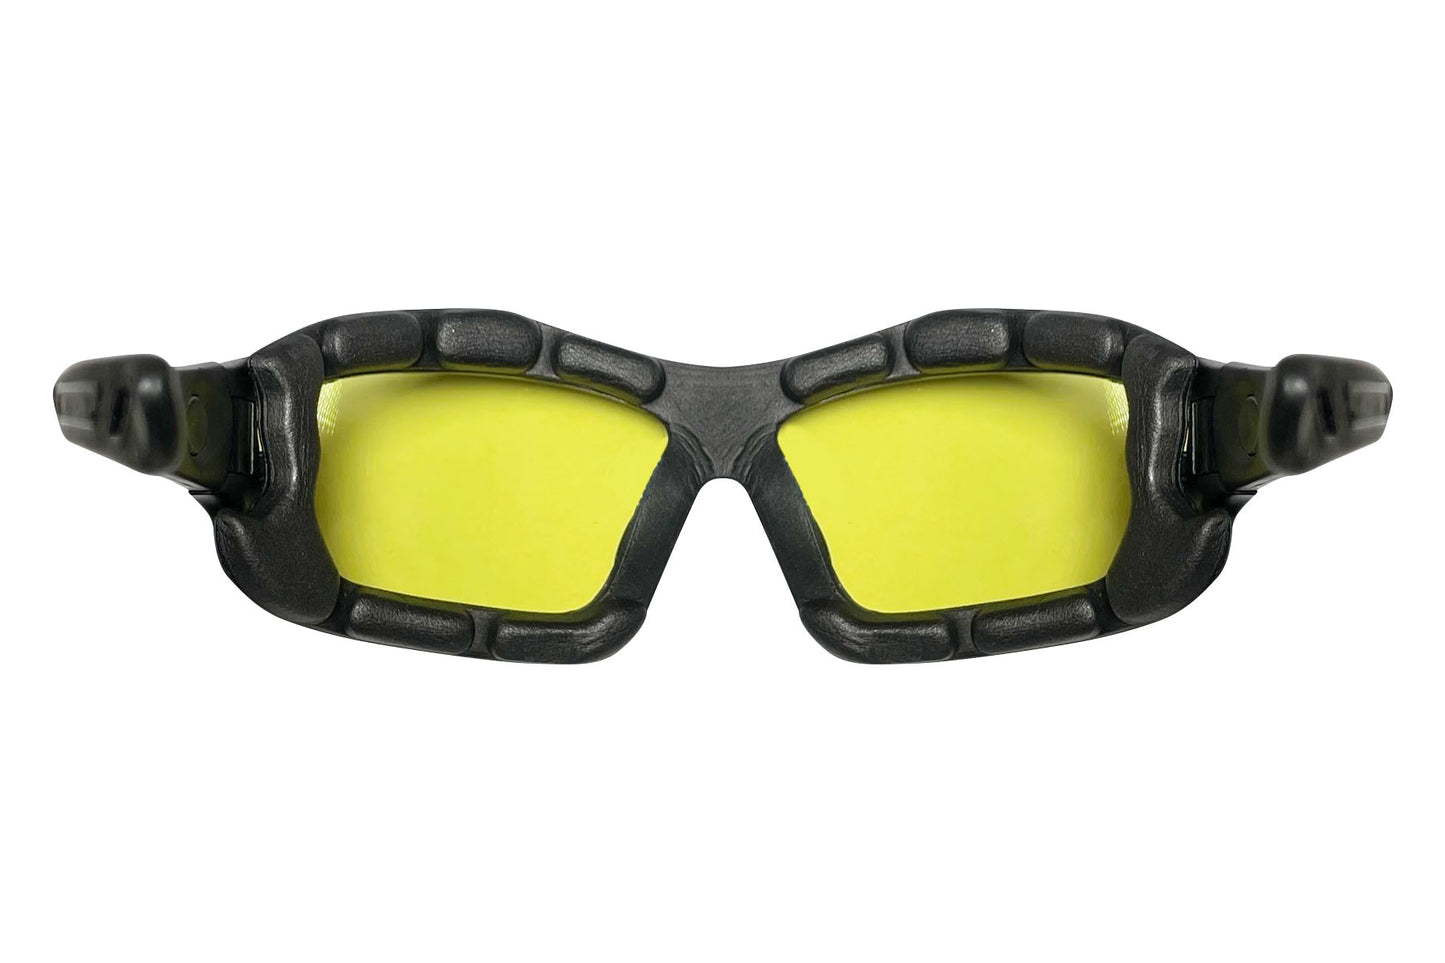 Zol Biker Goggle Sunglasses - Zol Cycling